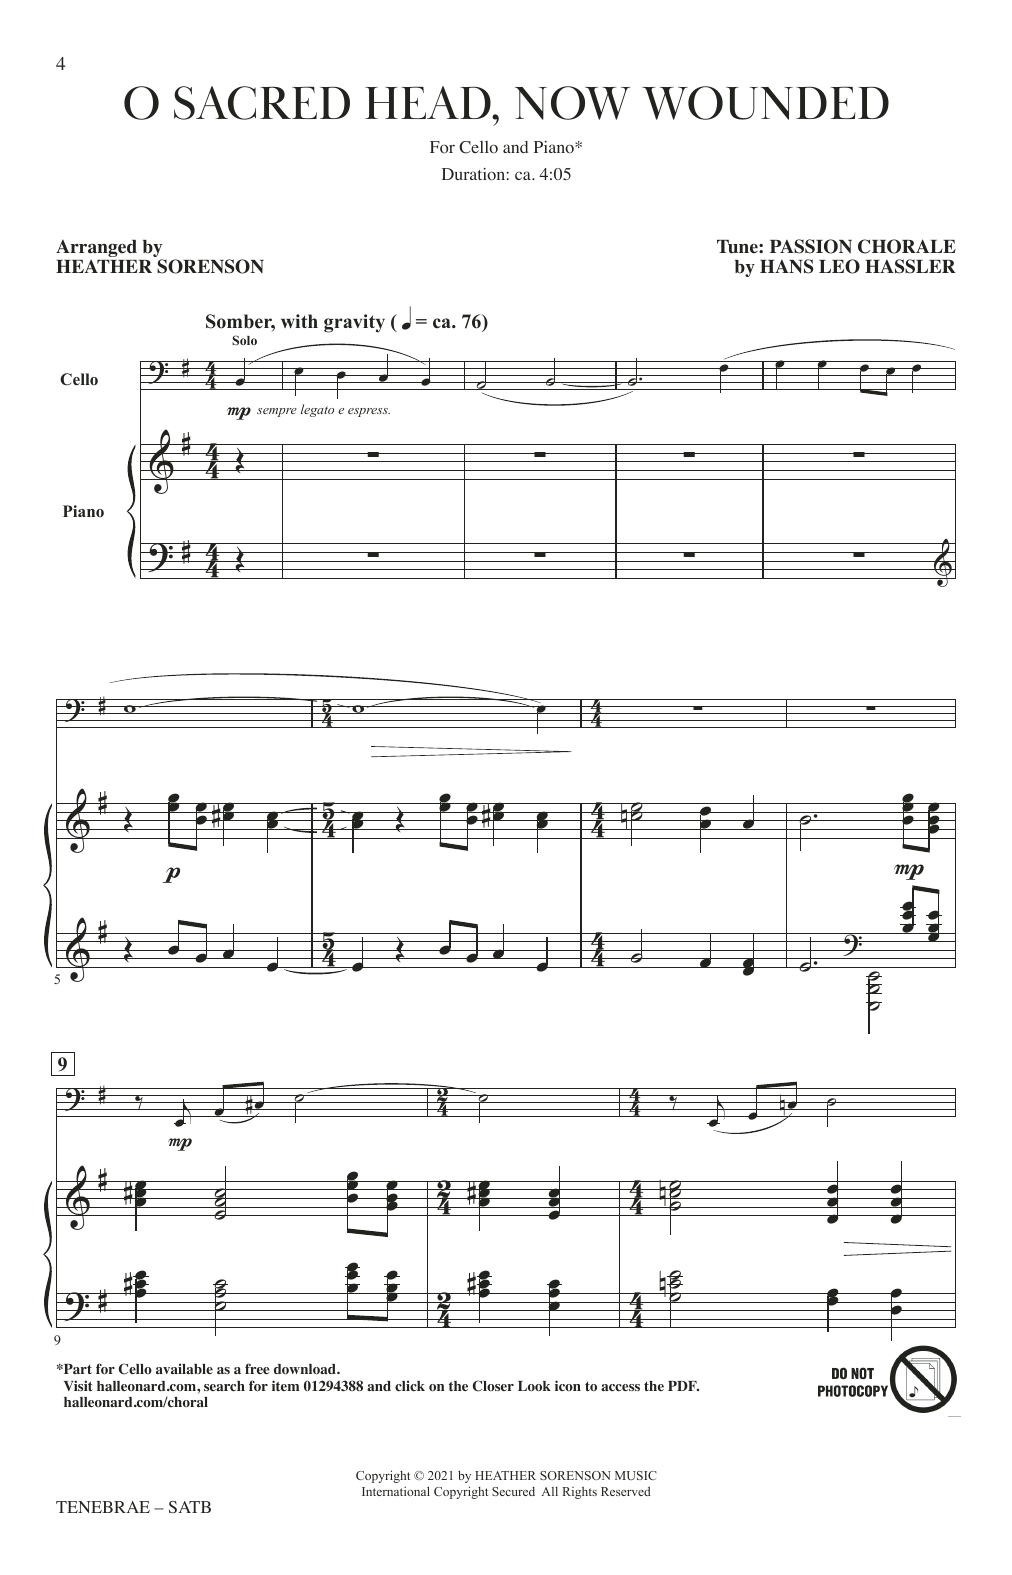 Heather Sorenson Tenebrae (A Service of Shadows) Sheet Music Notes & Chords for SATB Choir - Download or Print PDF